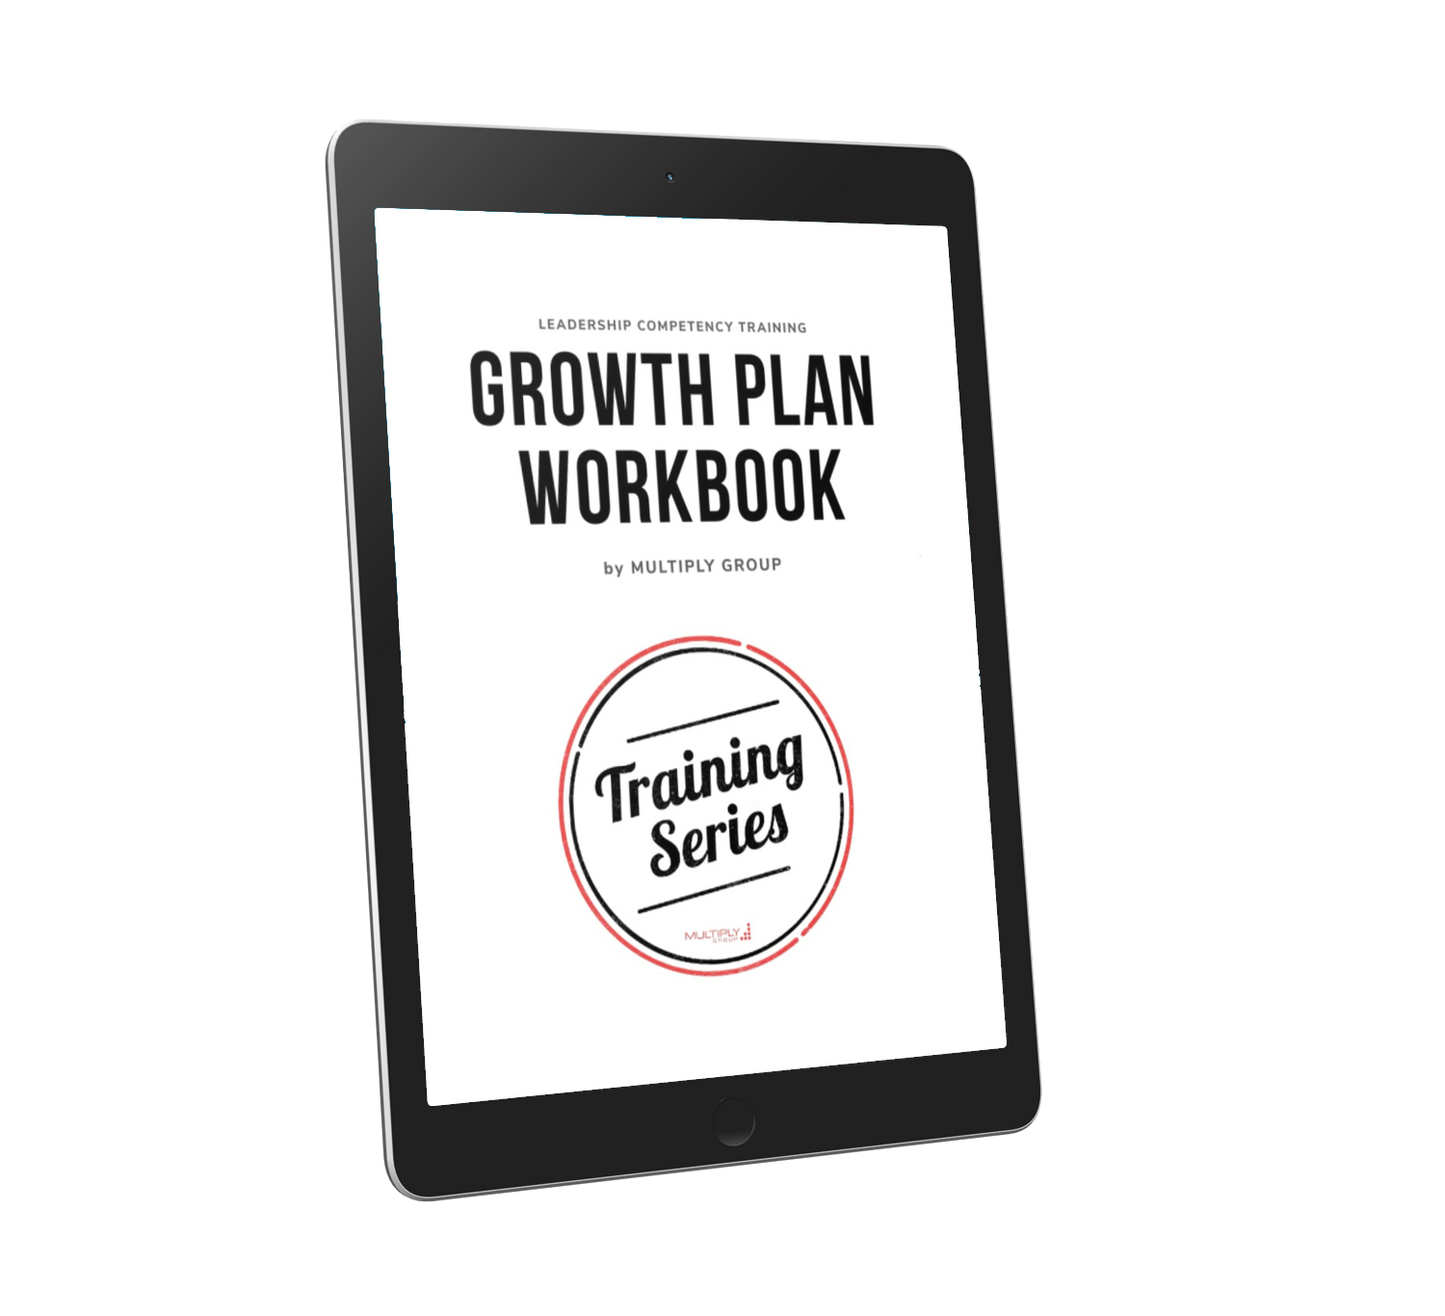 Personal Growth Plan Workbook [Digital]